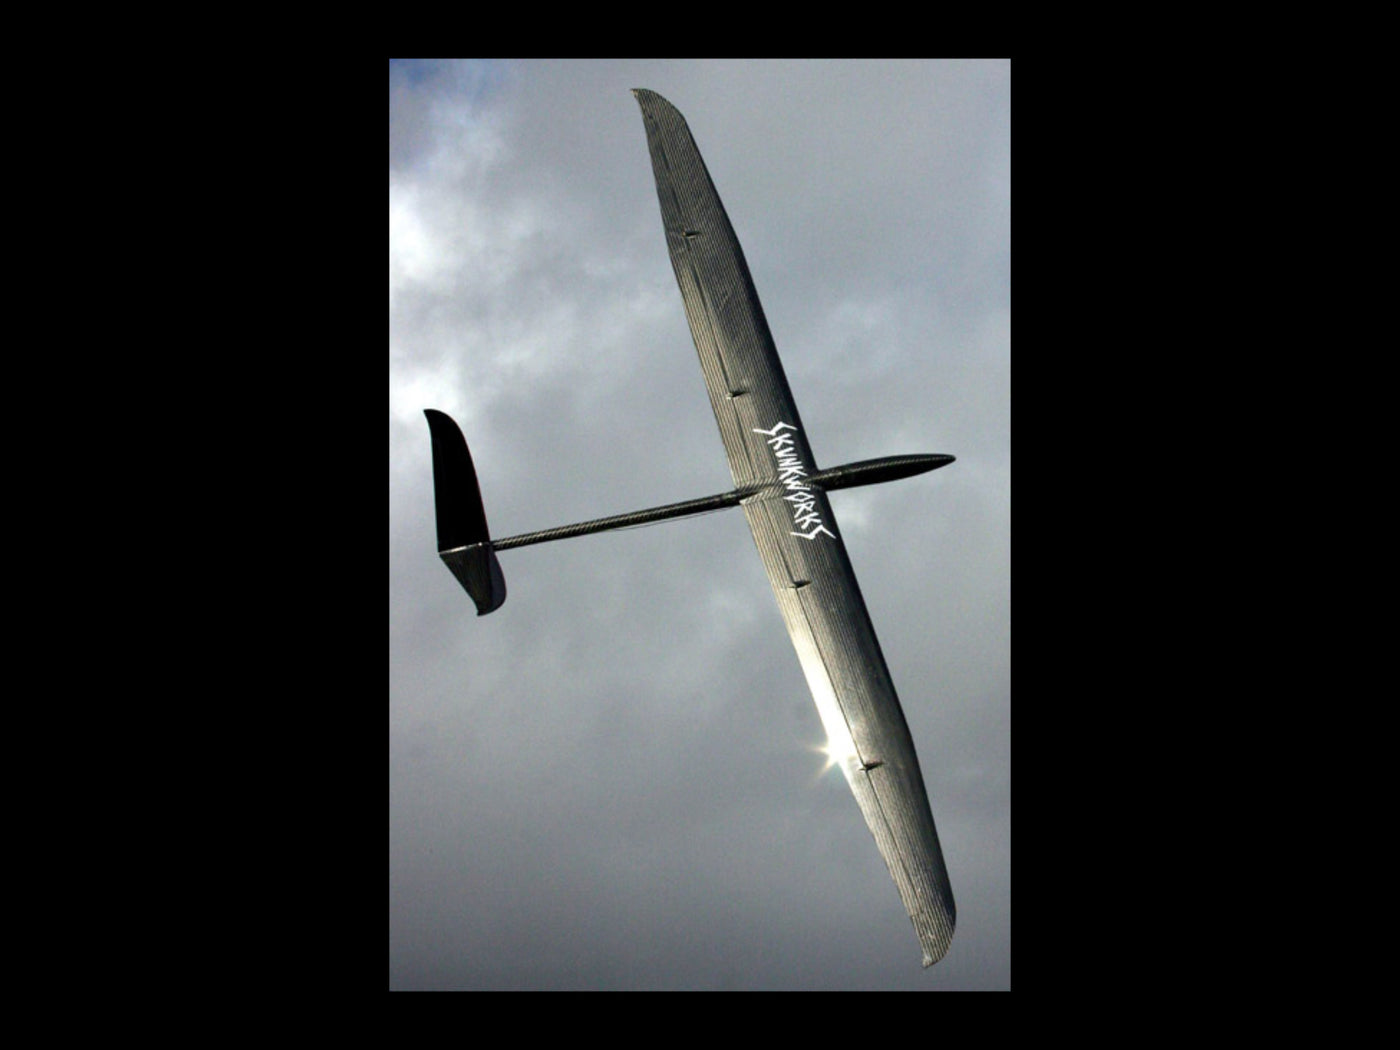 PCM Erwin - 2 Meter Slope Glider